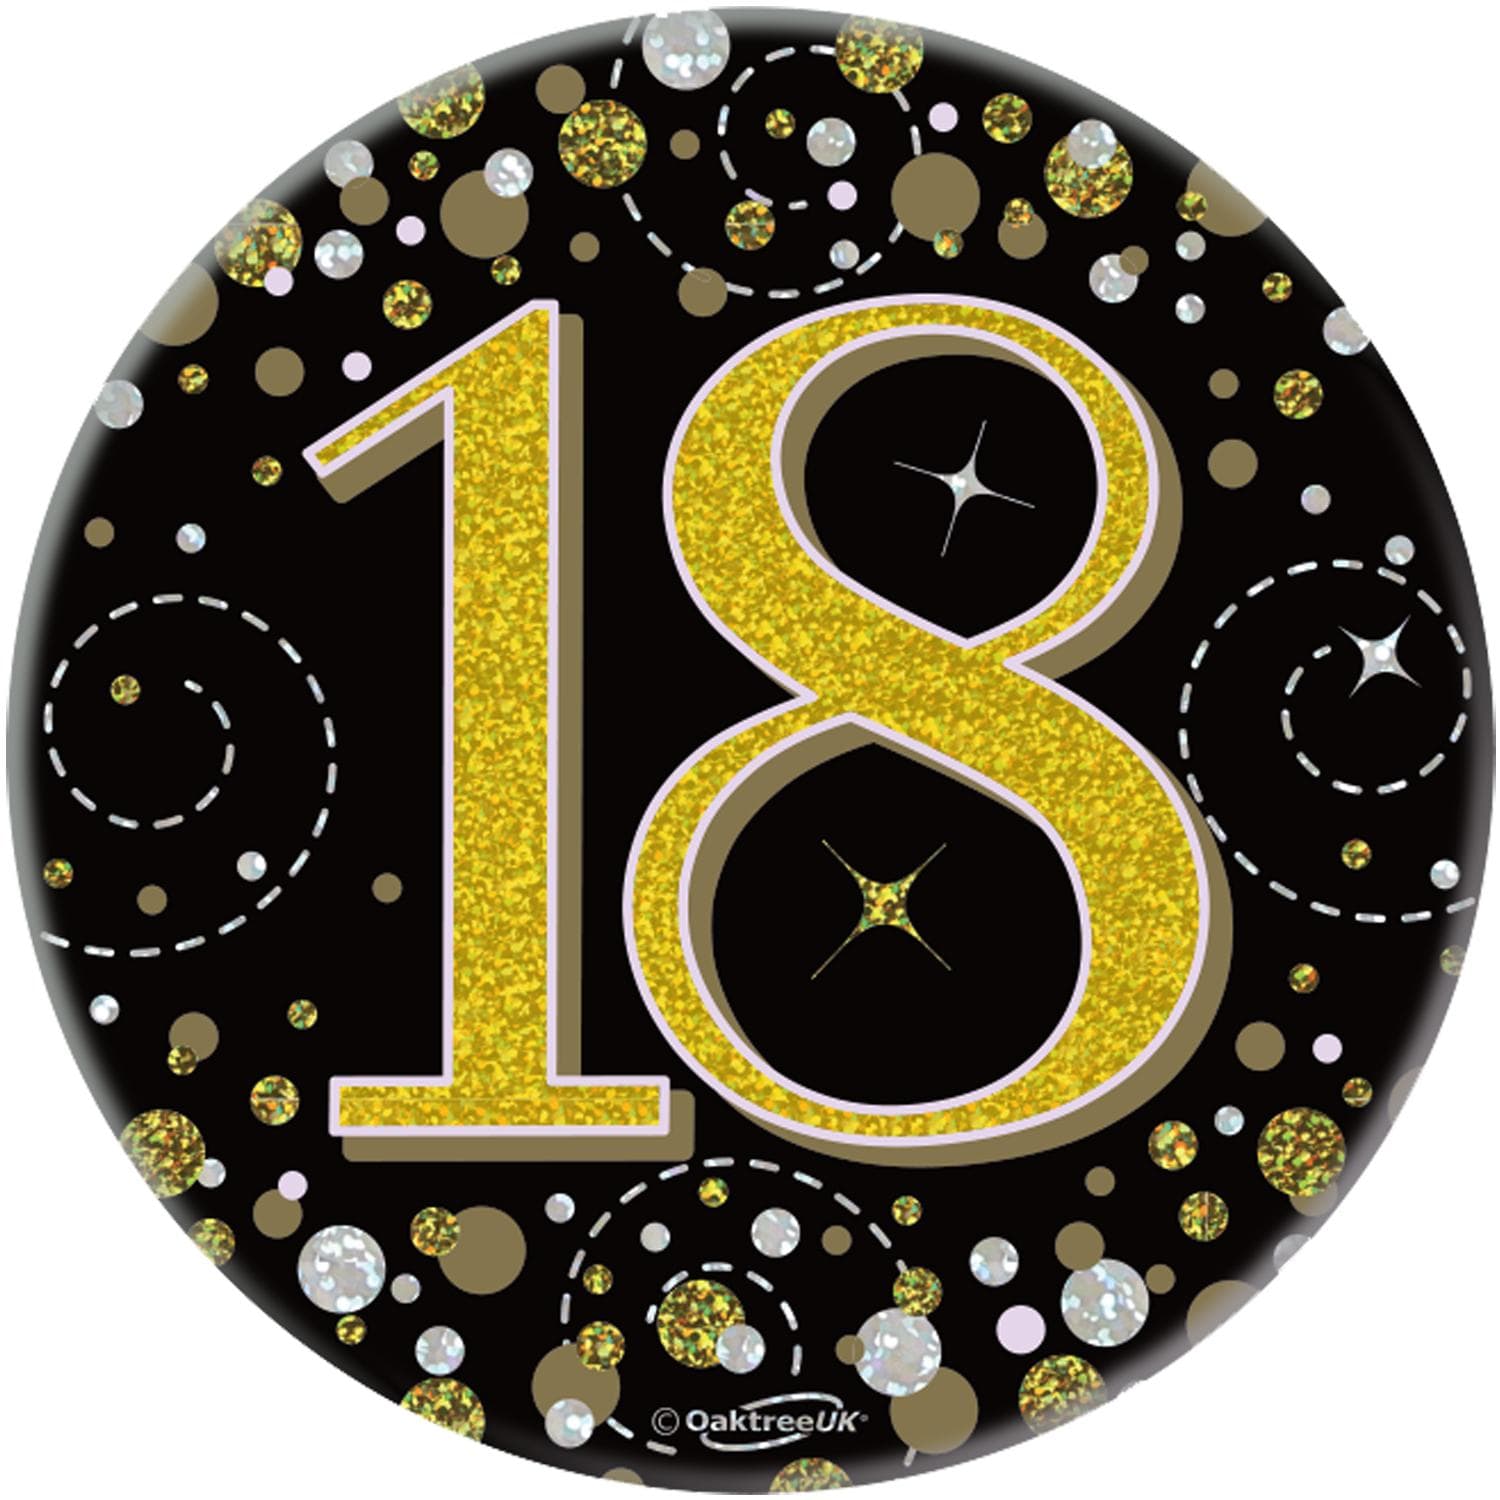 18th Birthday Sparkling Black Gold Fizz Badge